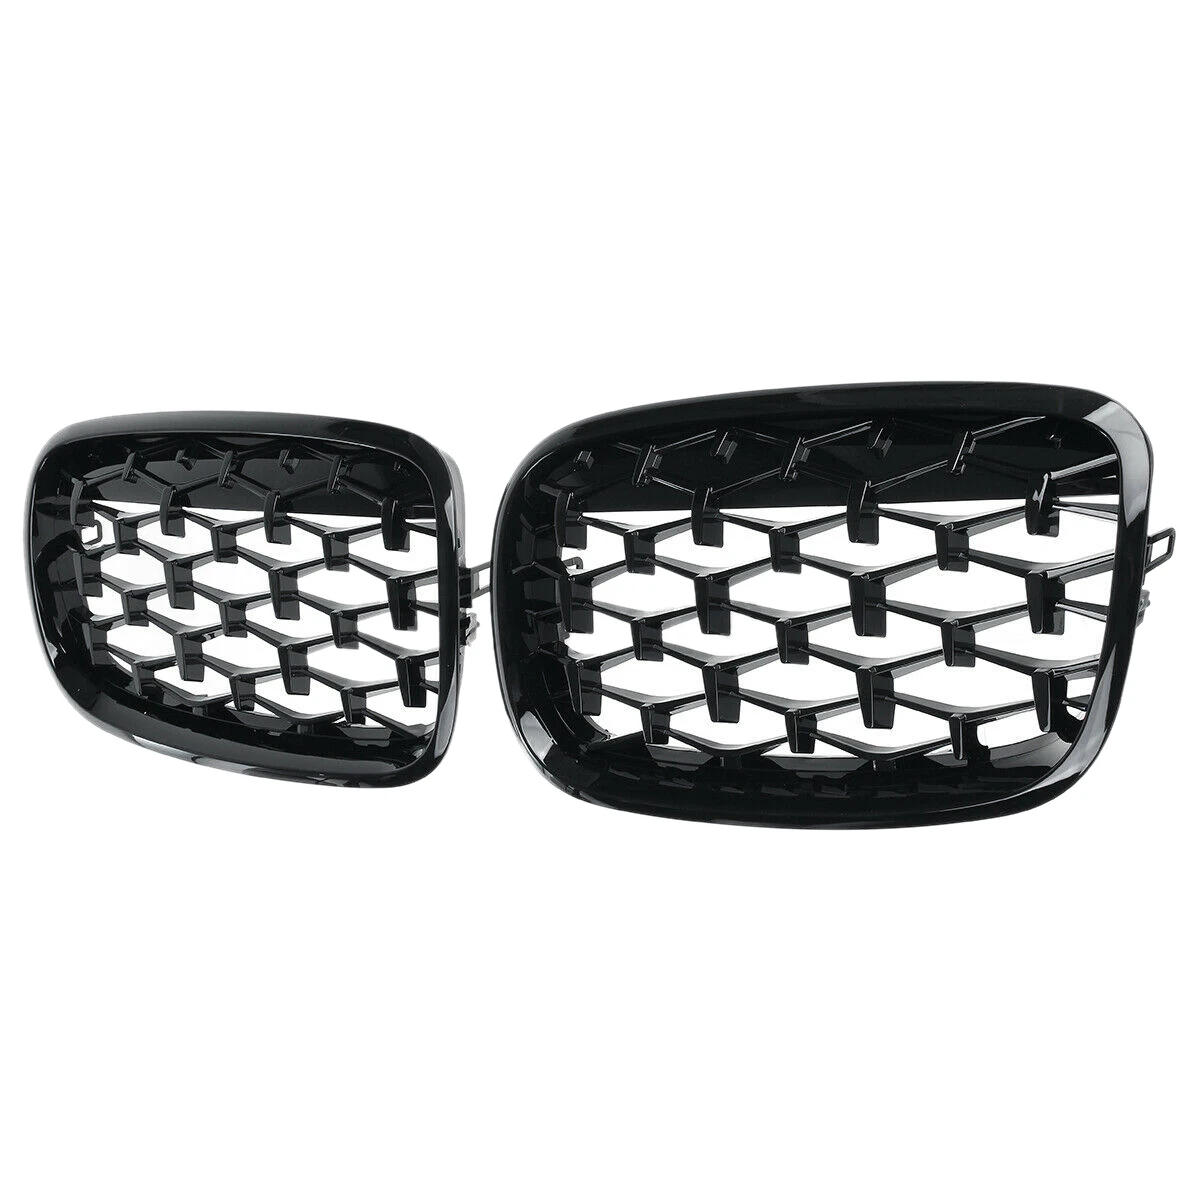 

Car Diamond Grills Front Kidney Grill Chrome Mesh Grille Car Accessories for BMW E70 E71 E72 X5 X6 2007-2013 Black